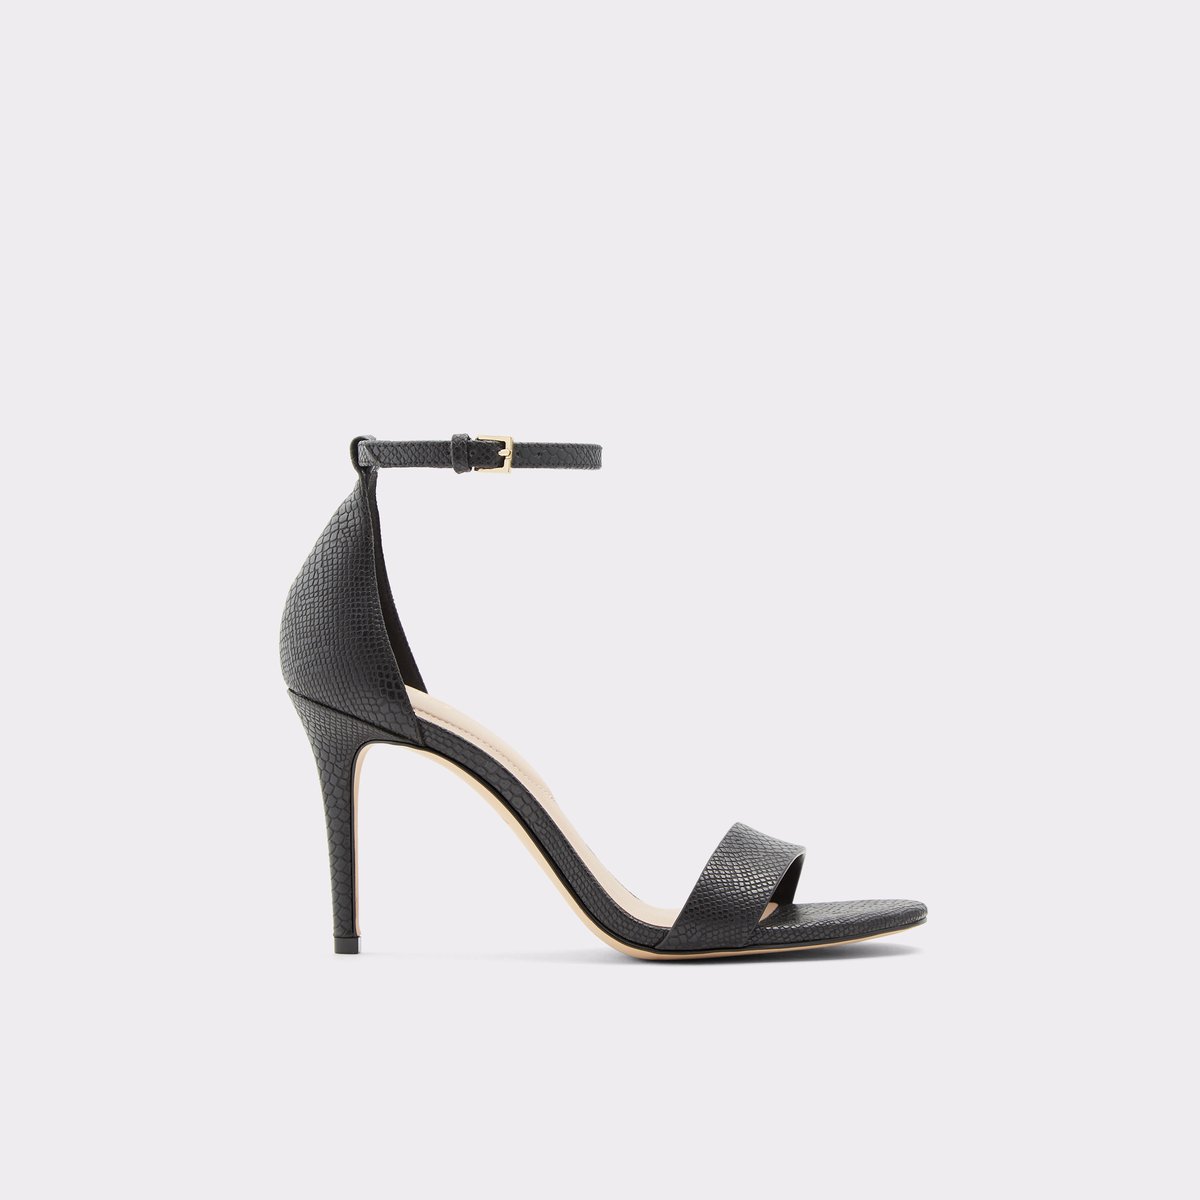 aldo black heels